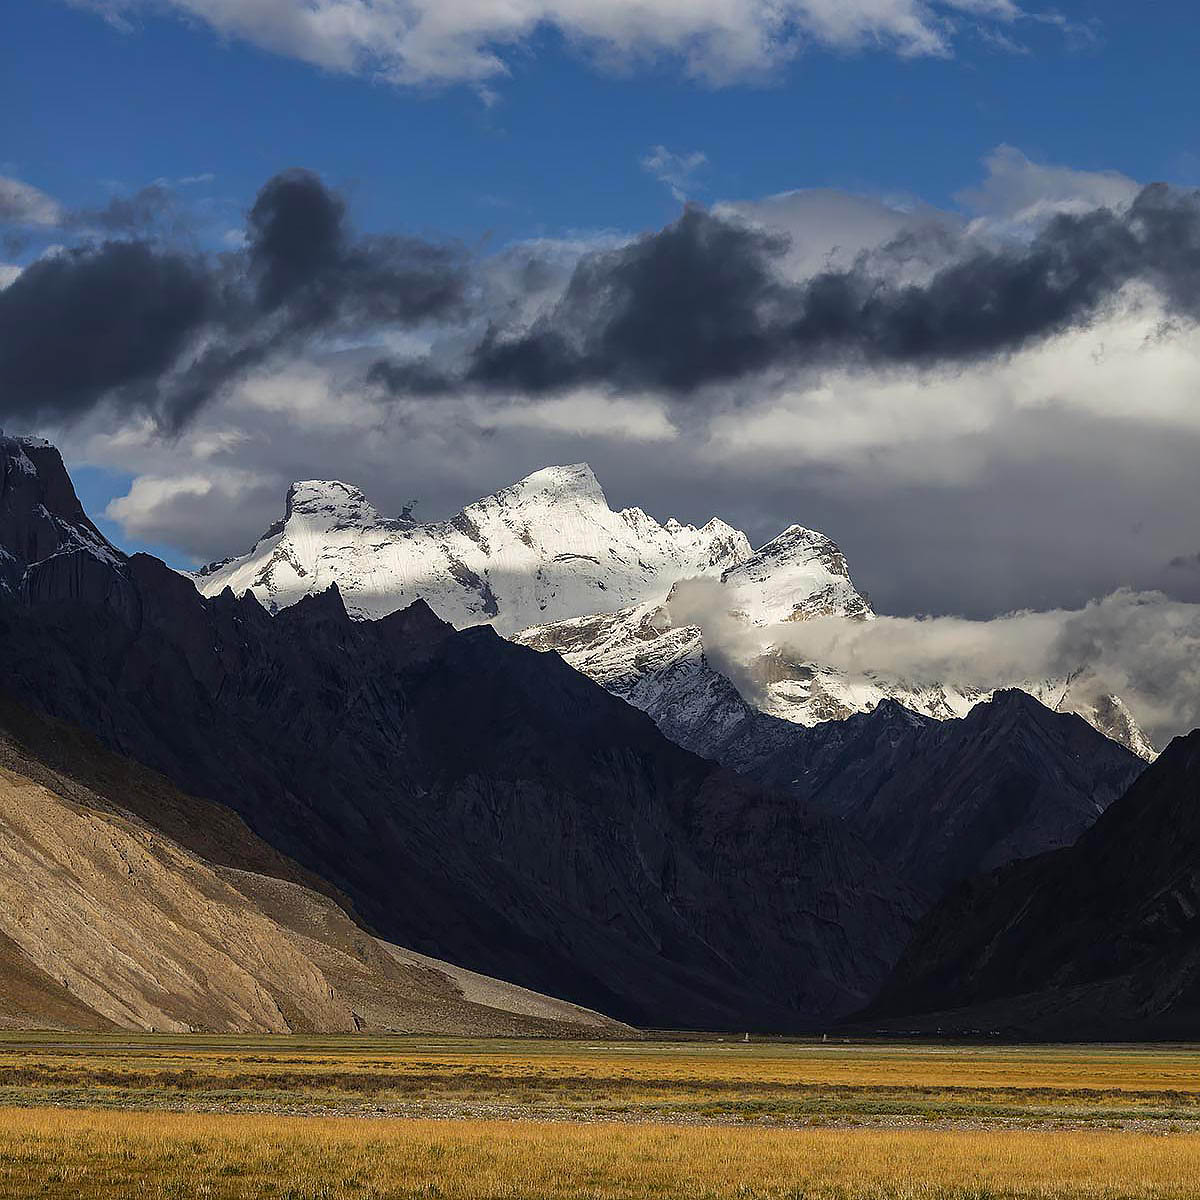 The massive himalayan peaks of NUN and KUN are 23,409 feet high - ZANSKAR, LADAKH, INDIA